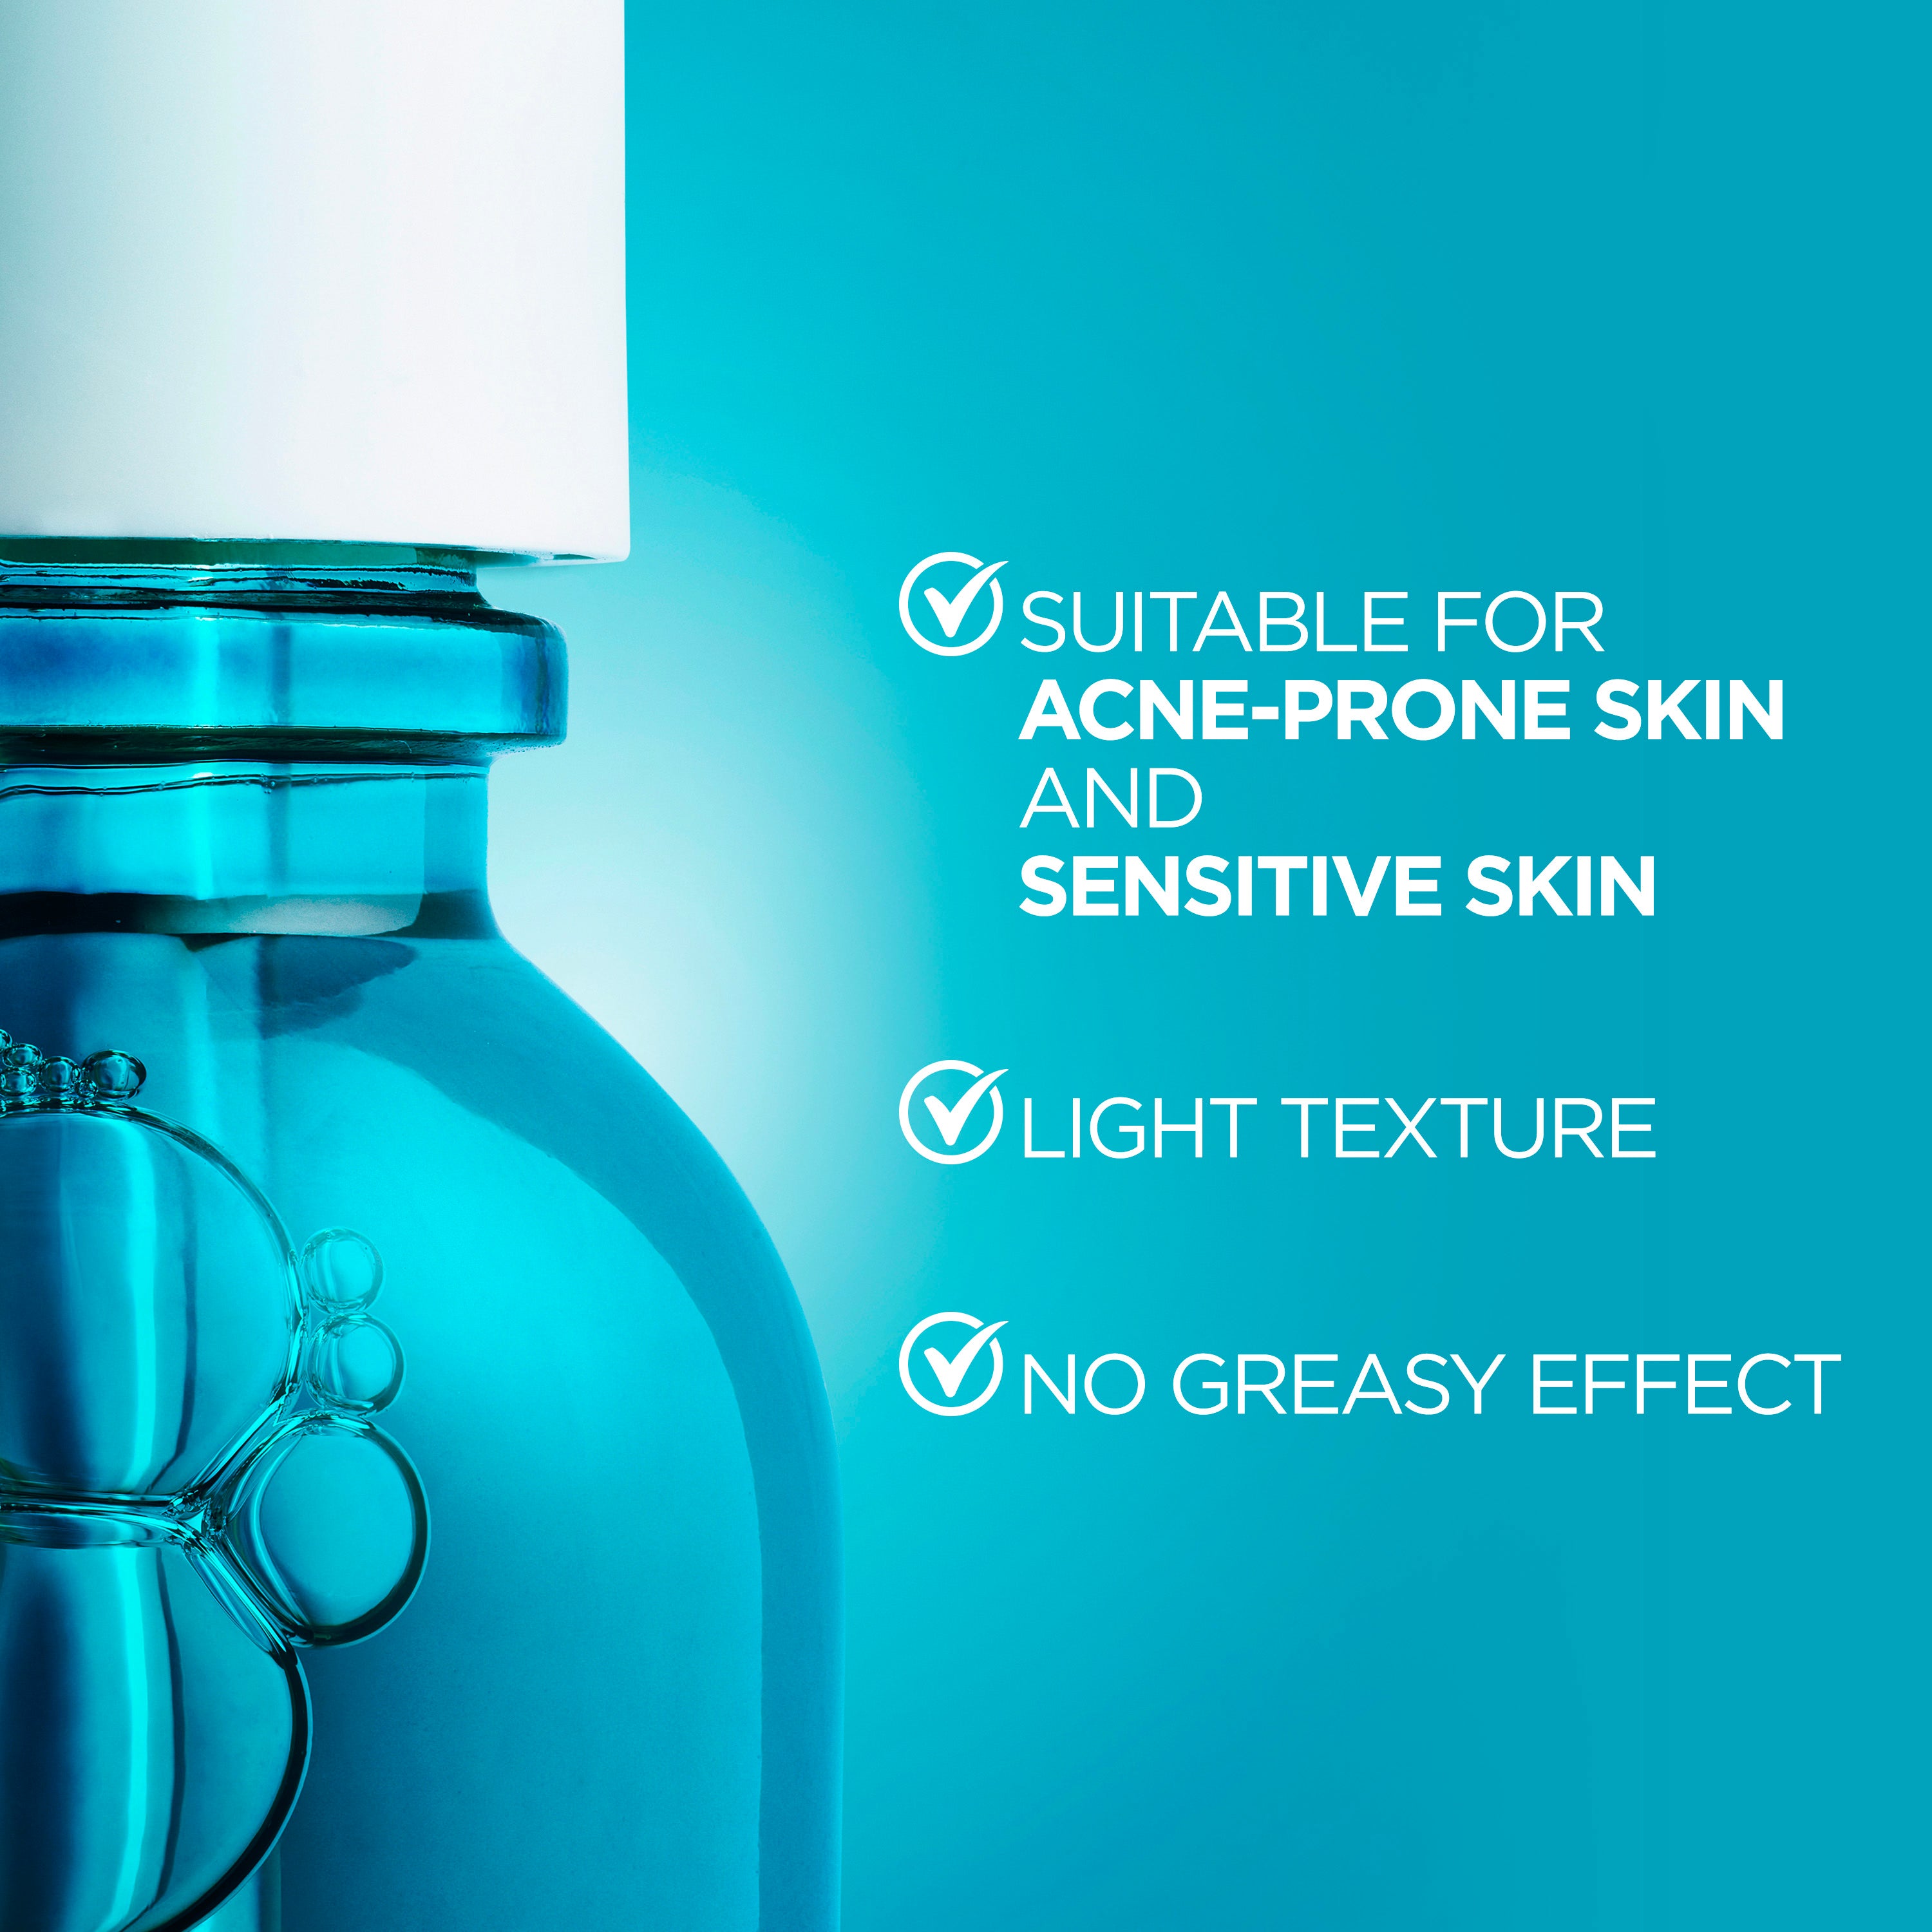 Garnier Fast Clear Serum for Acne Prone Skin - 30ml